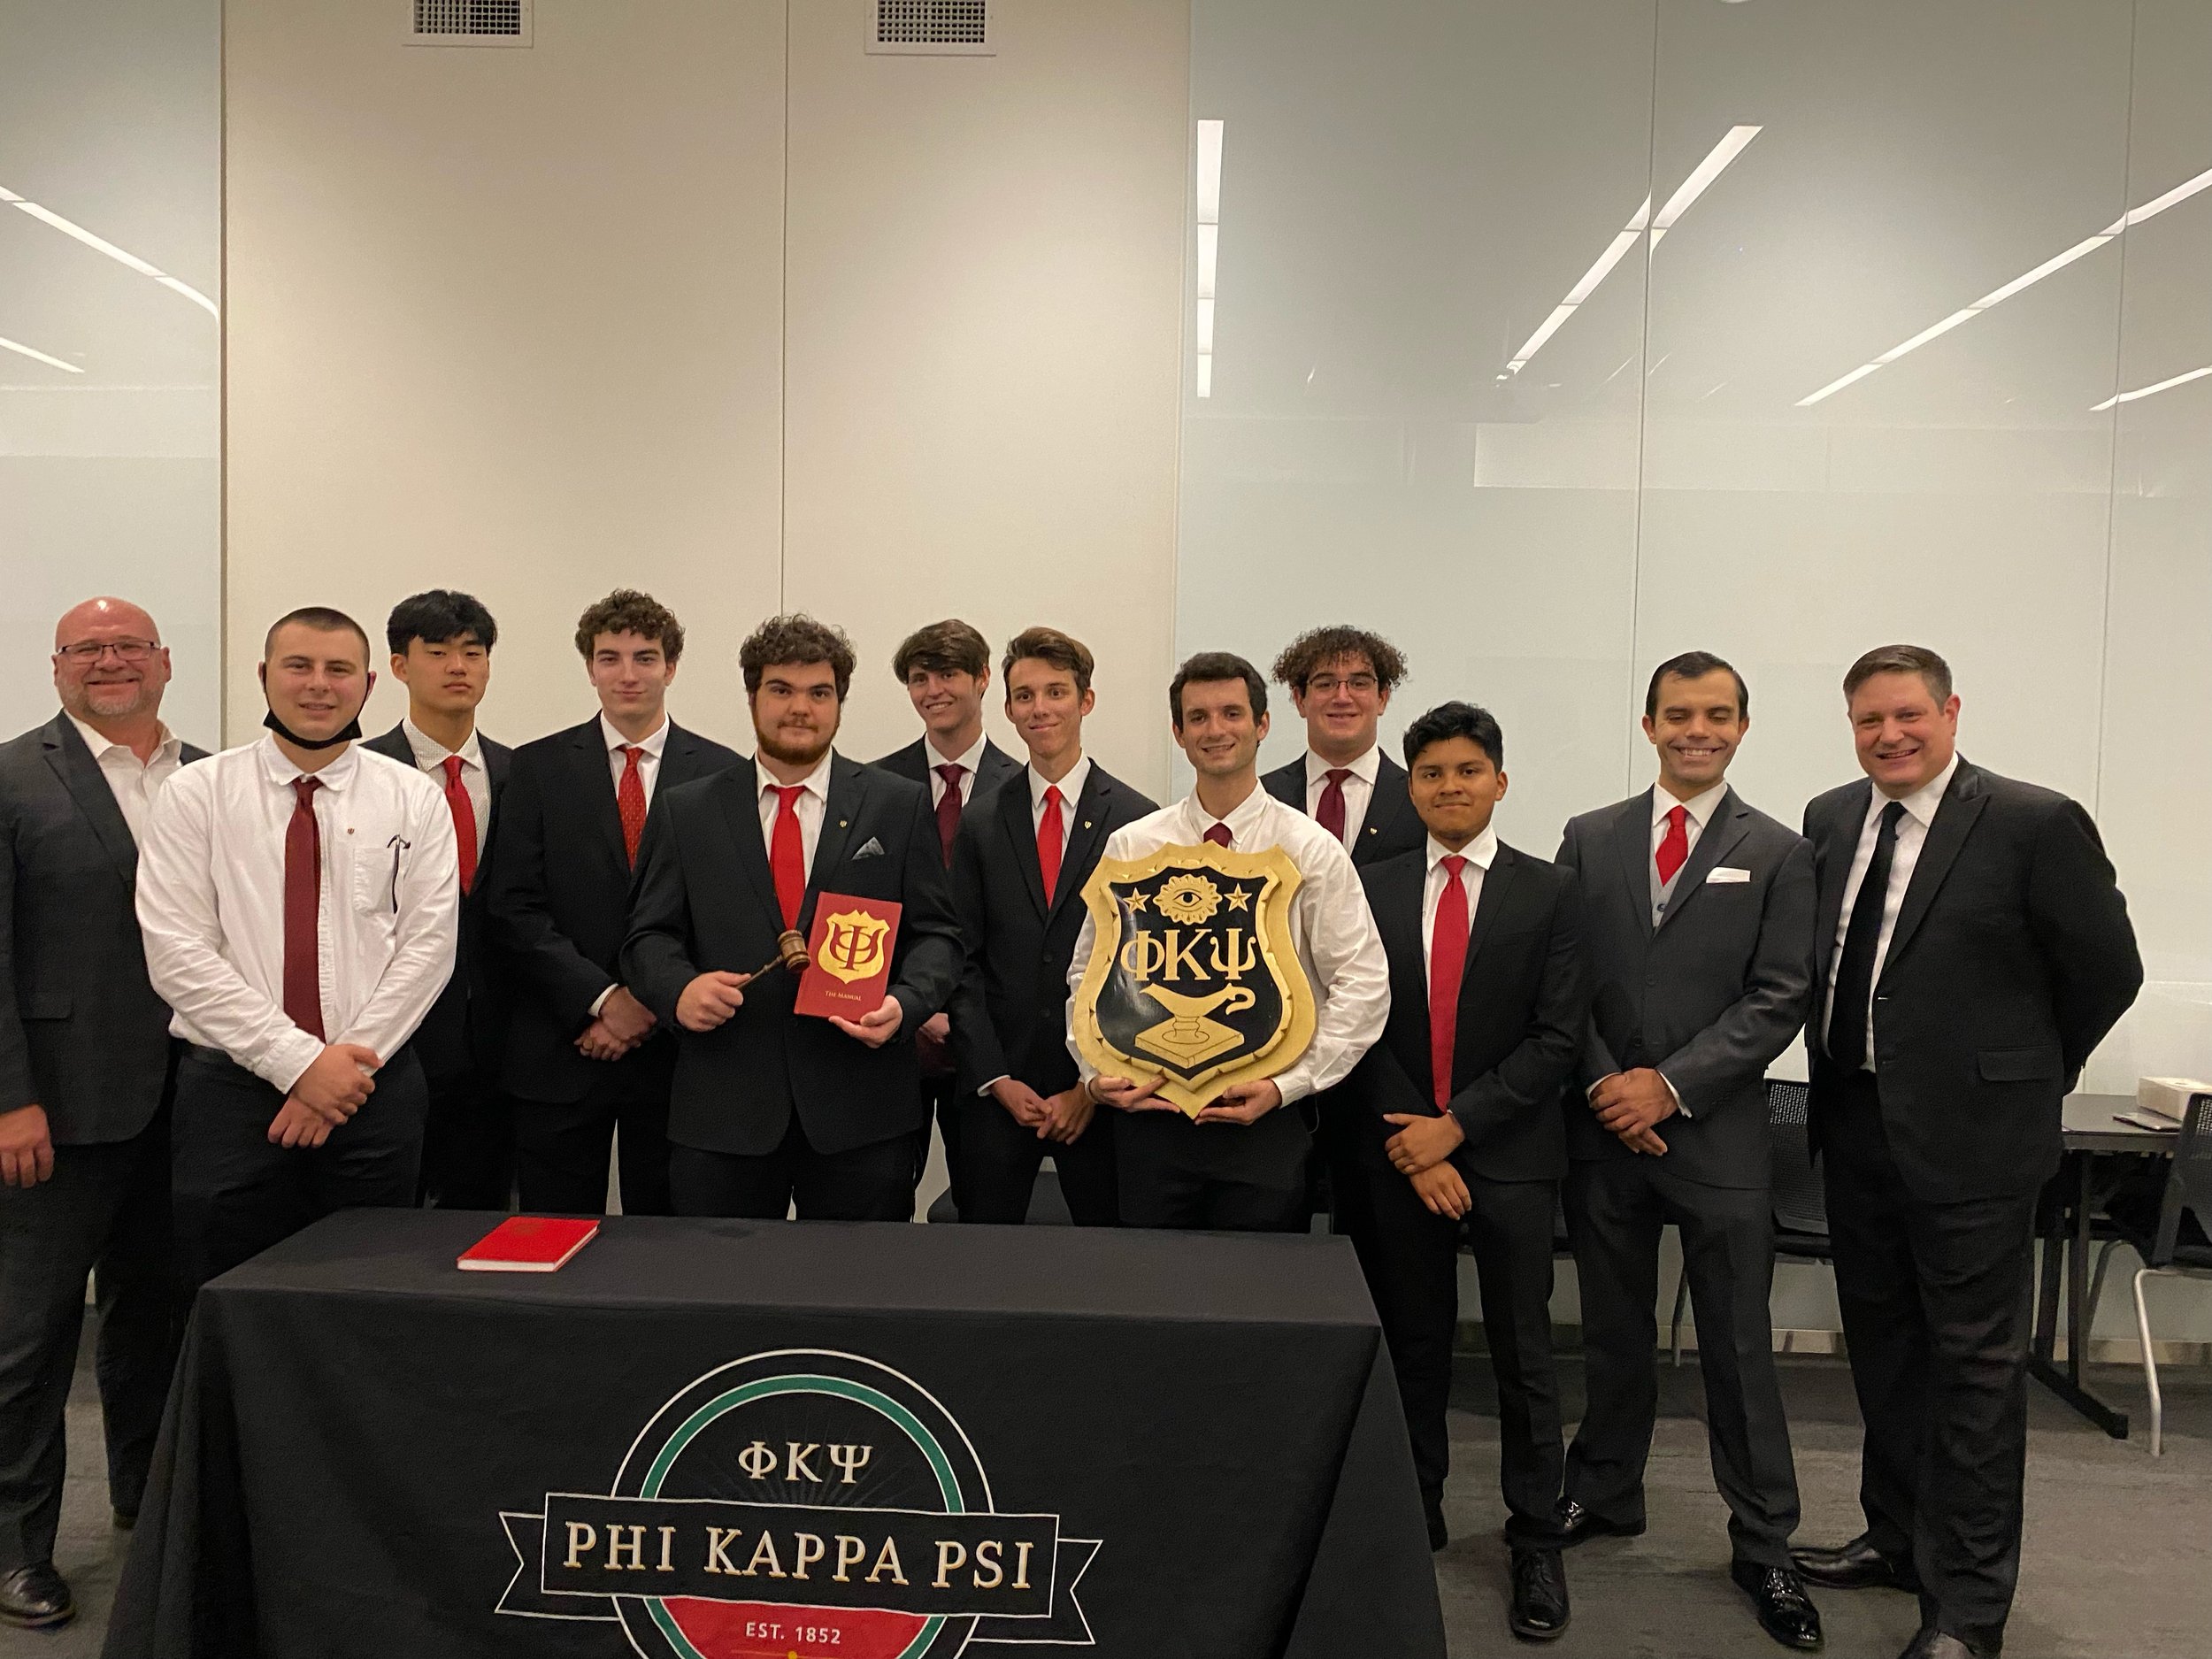 Phi Kappa Psi (Φ Κ Ψ)  Fraternity and Sorority Leadership & Learning